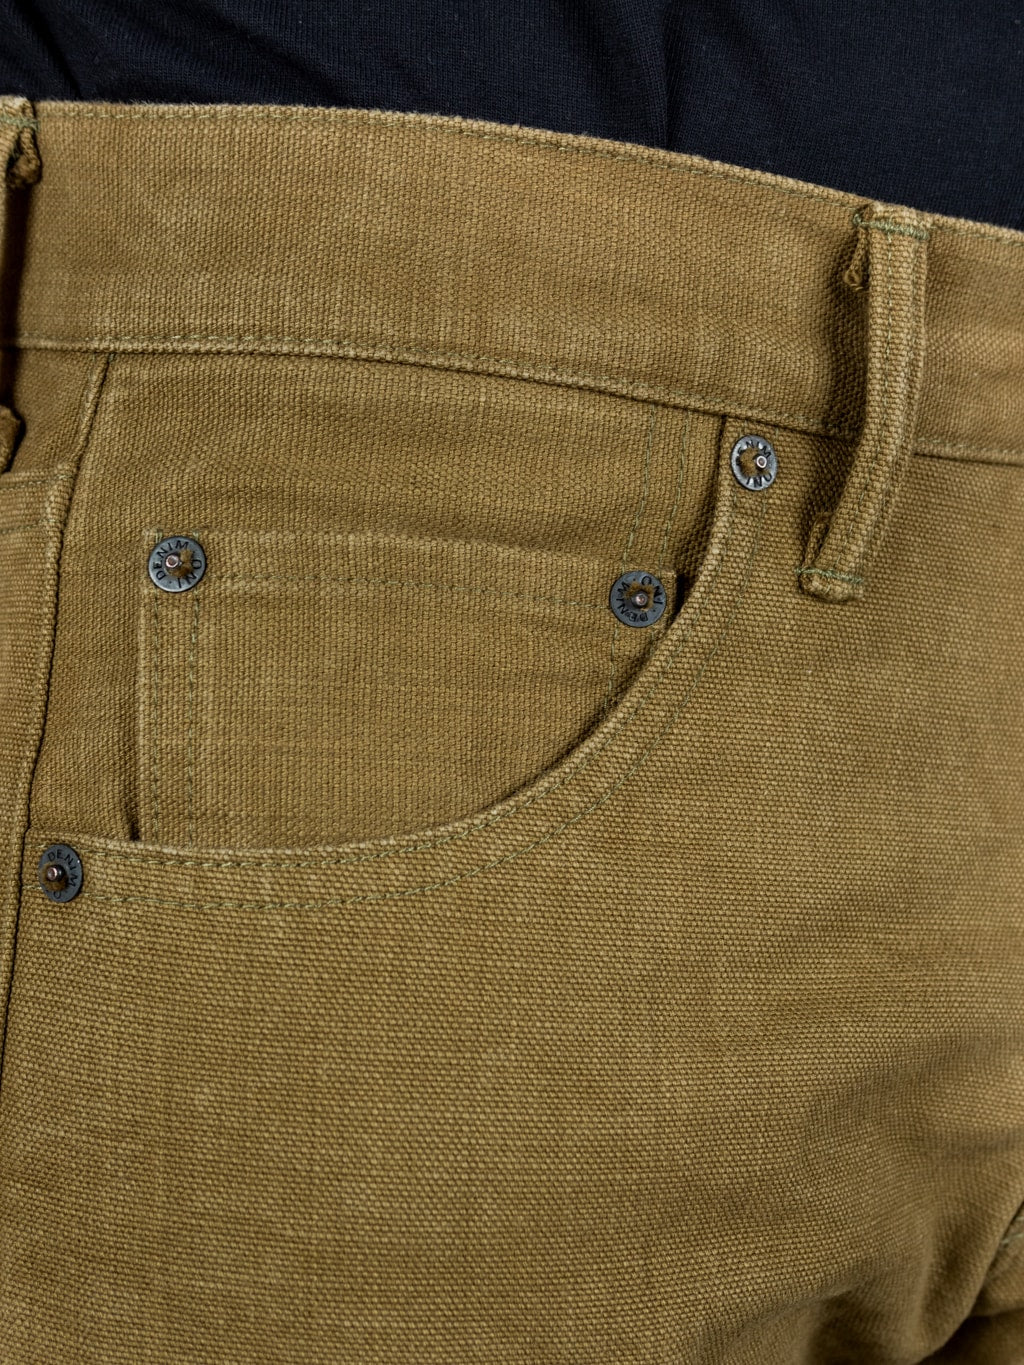 Redcast Heritage x ONI Denim "Heavy Oxford" Jeans Front Pocket